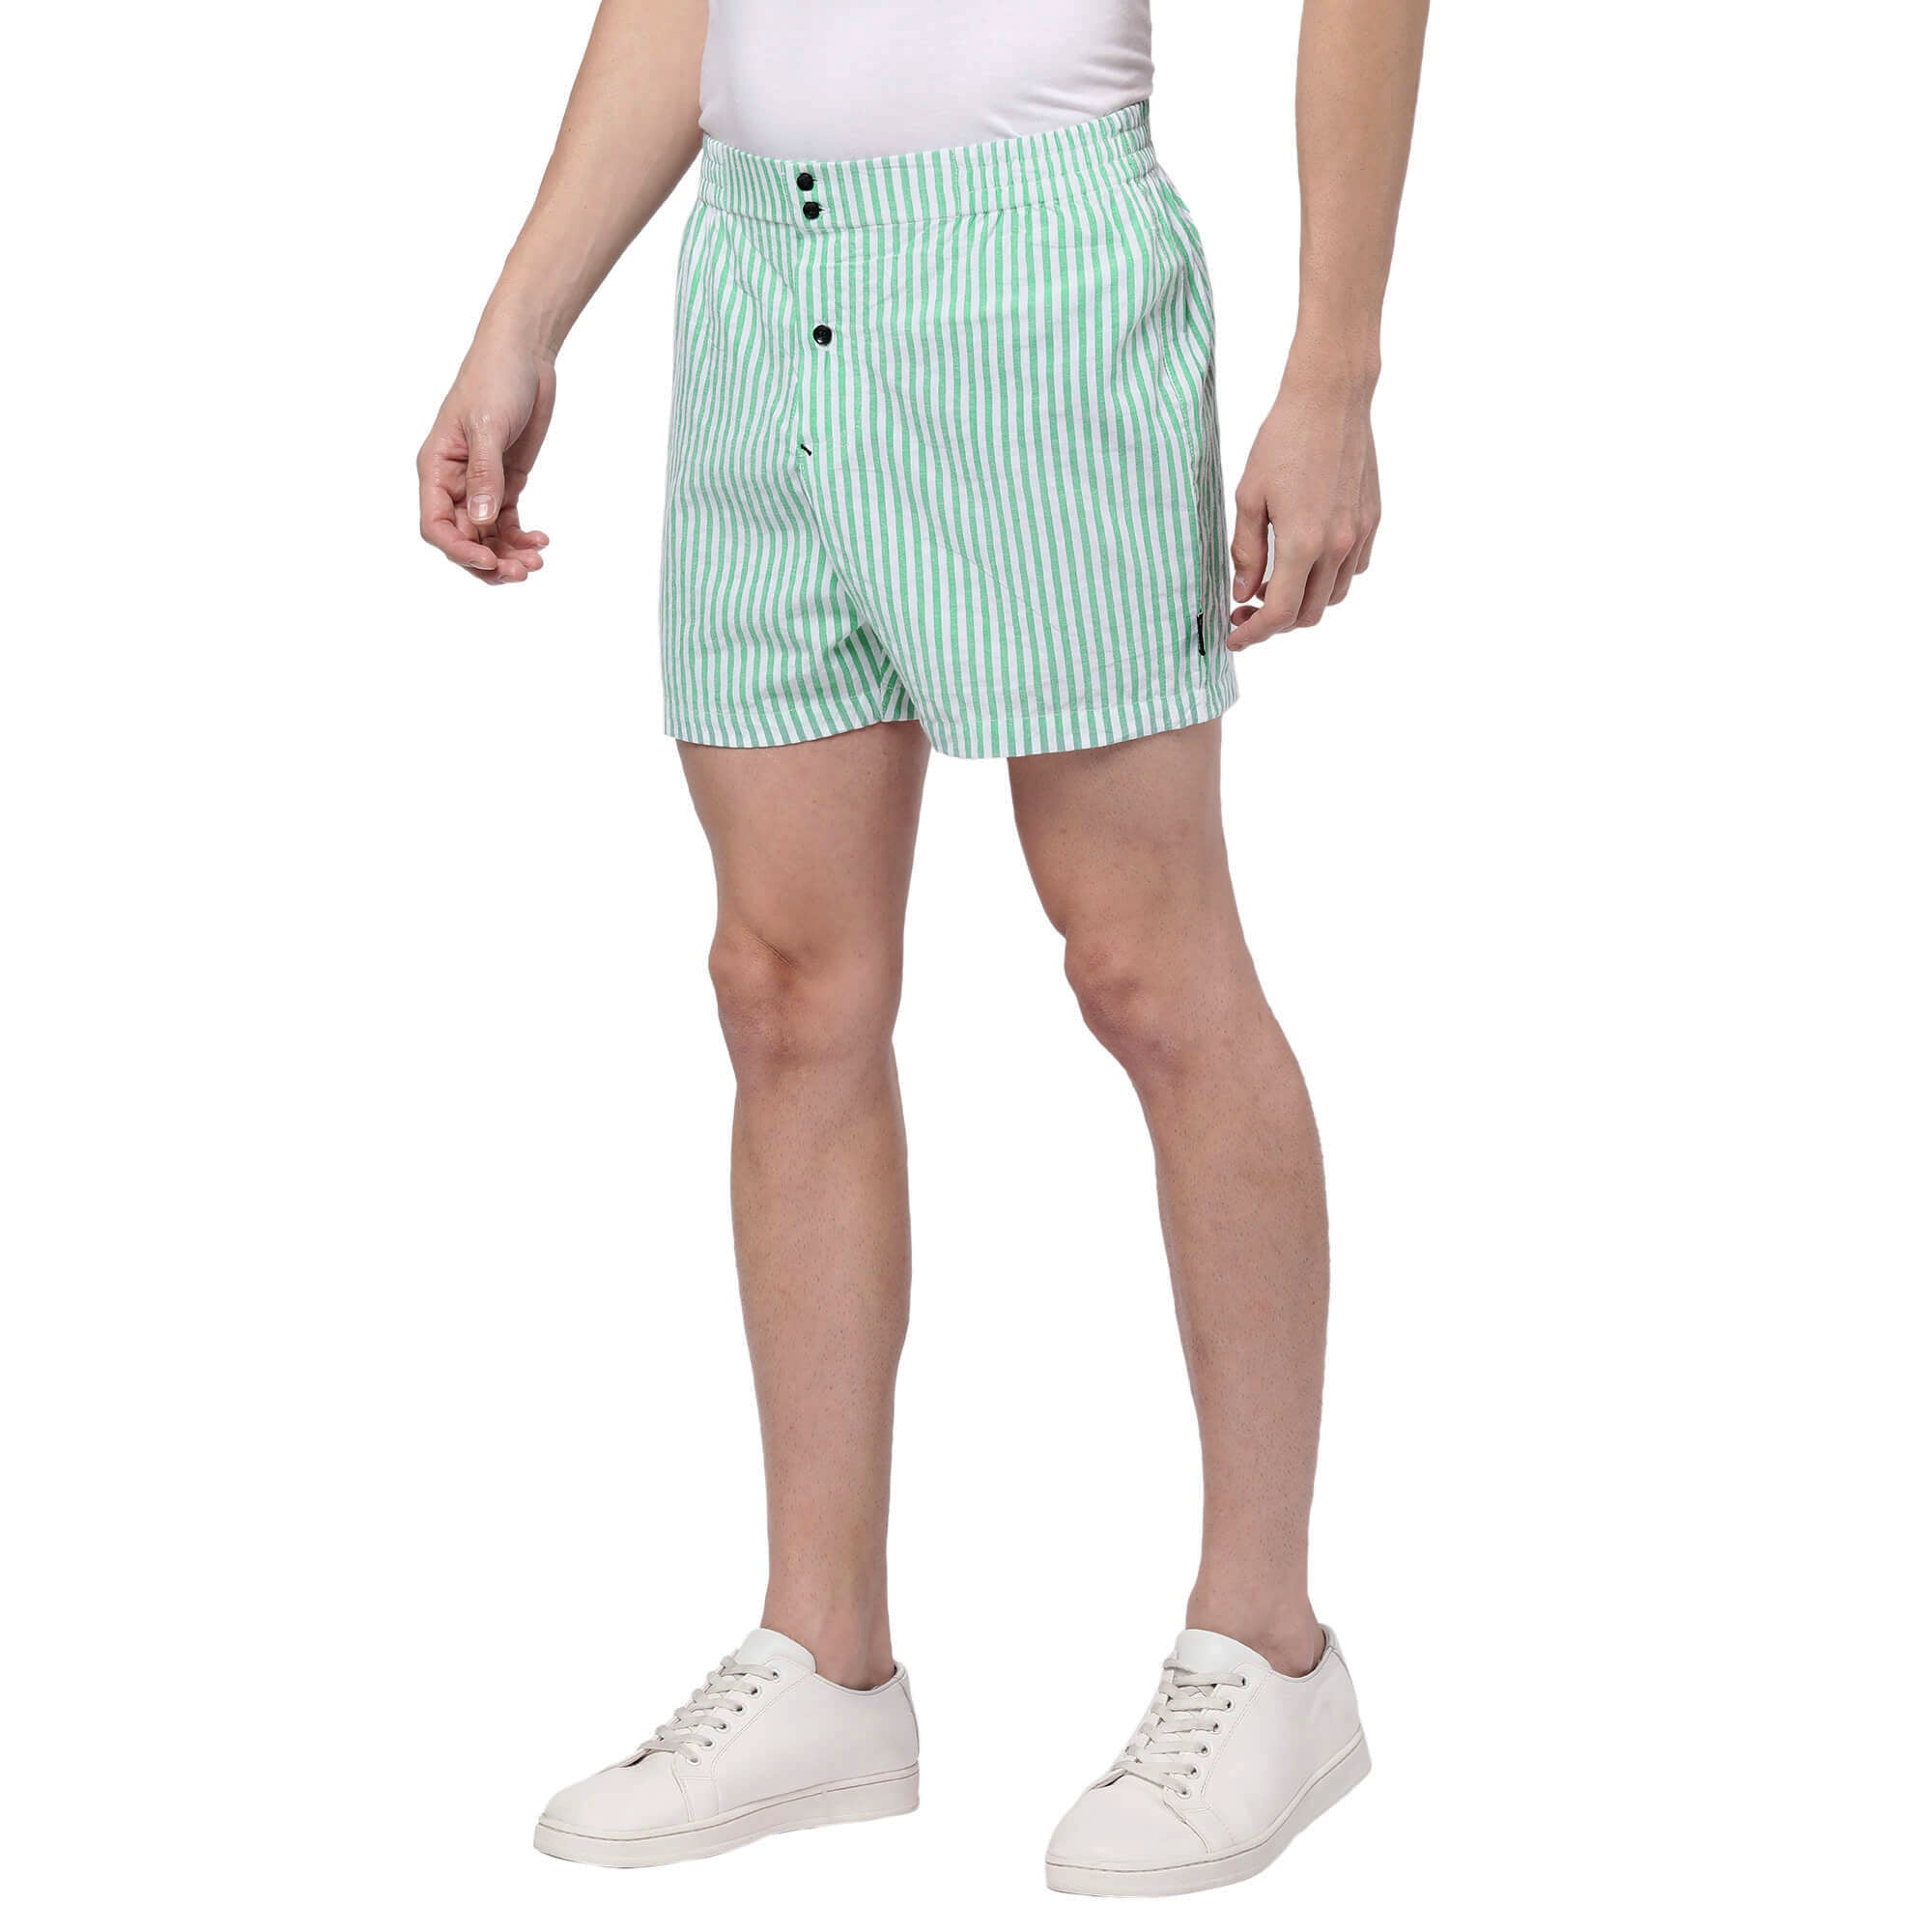 Green Stripes Shorts for Men